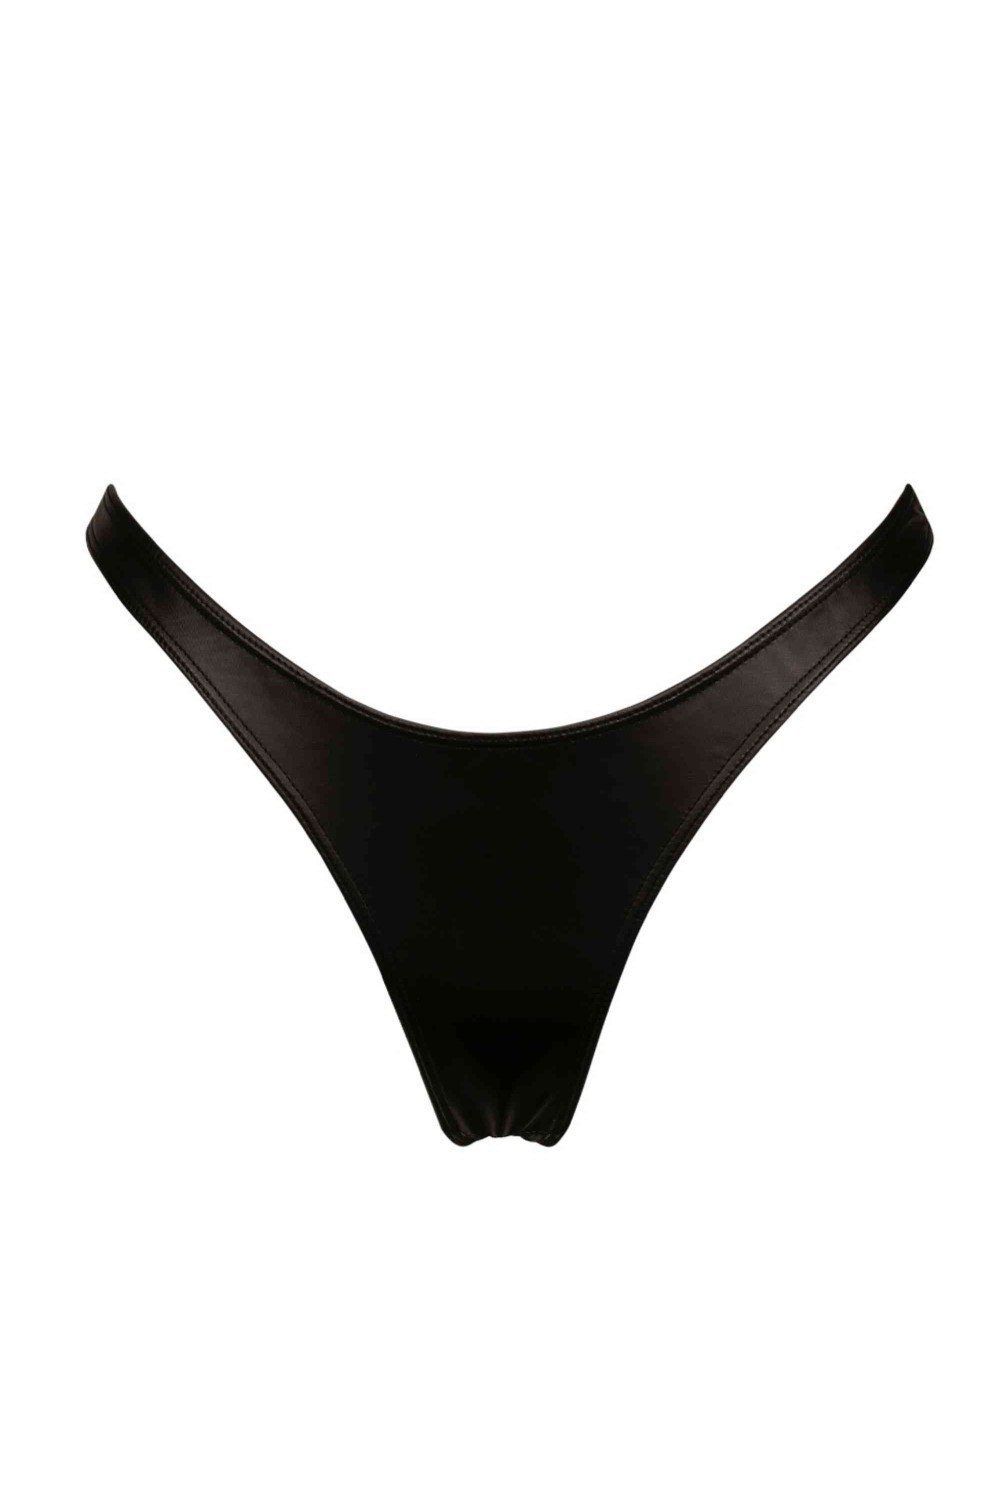 Womens Sexy Black G-String Thong Panties Underwear Under Wear Size S/M NEW